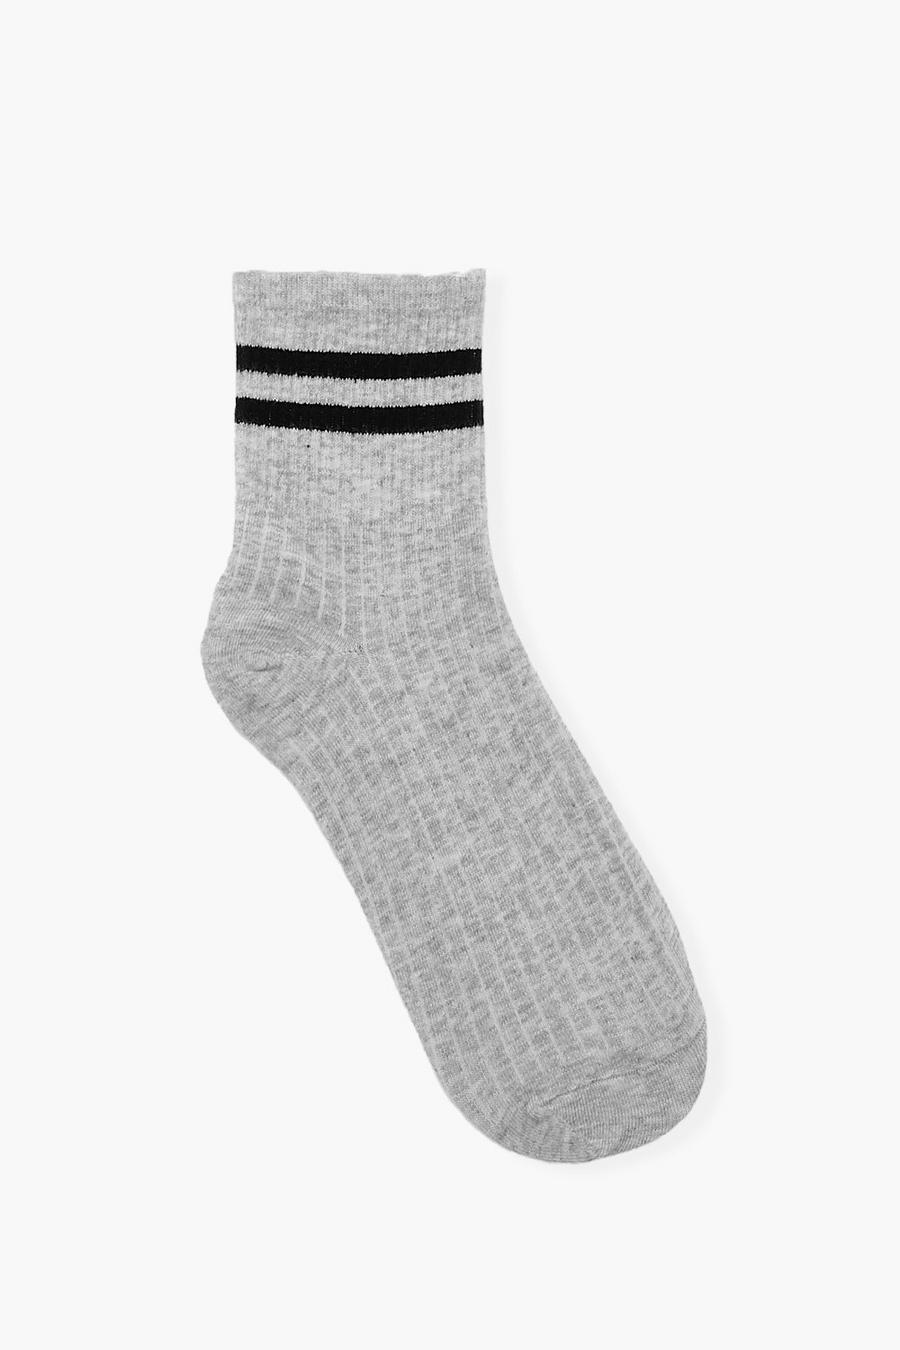 Single Grey Sport Socks 